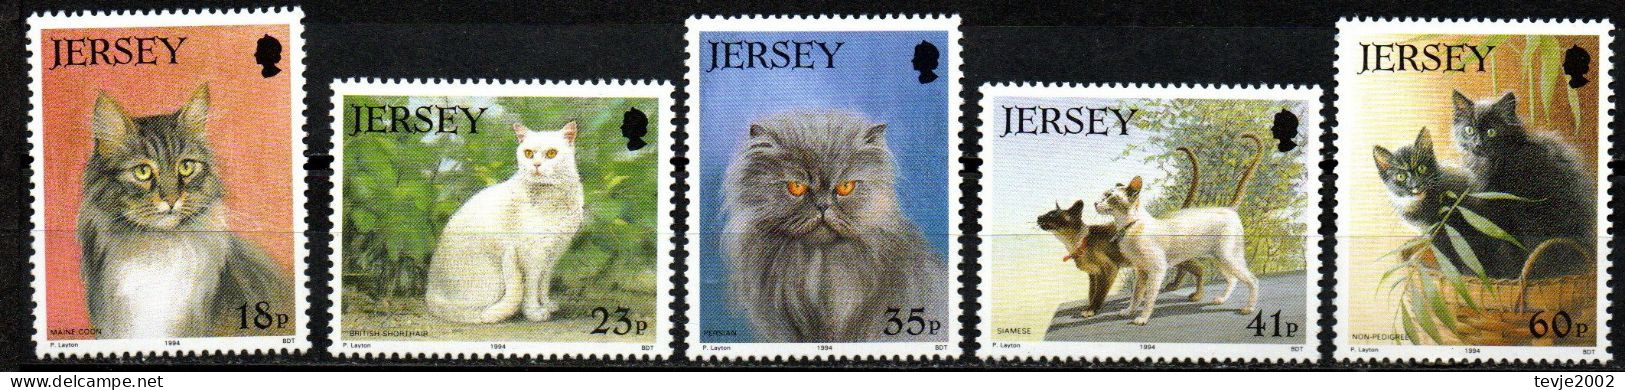 Jersey 1994 - Mi.Nr. 645 - 649 - Postfrisch MNH - Tiere Animals Katzen Cats - Domestic Cats